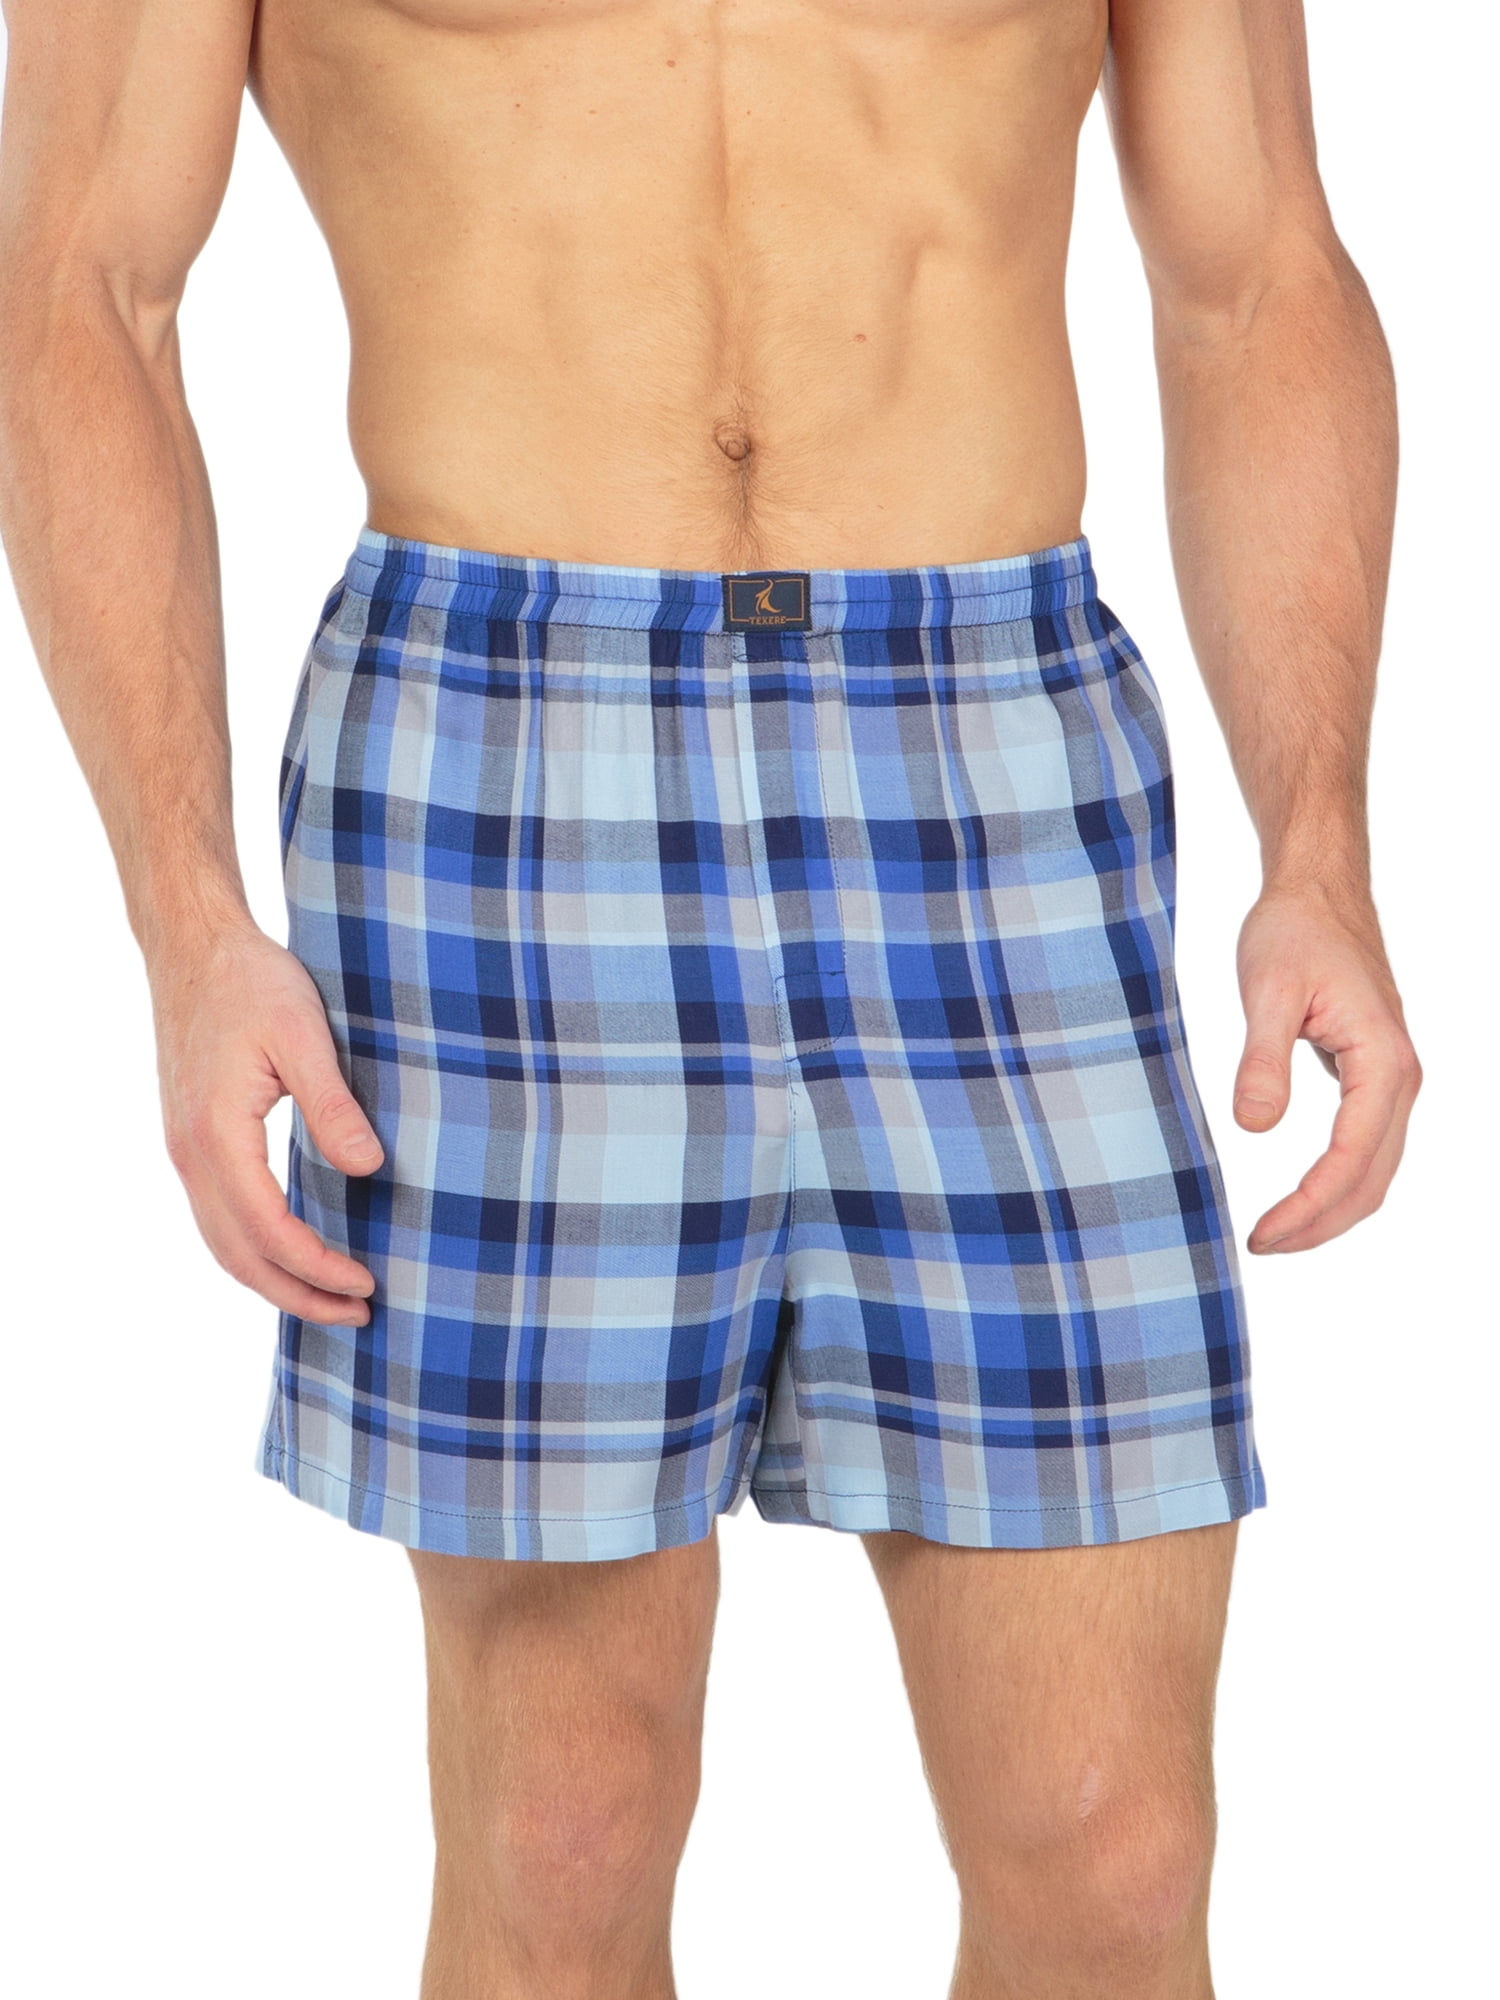 Texere Men's Plaid Boxer Short Underwear MB6105 - Walmart.com